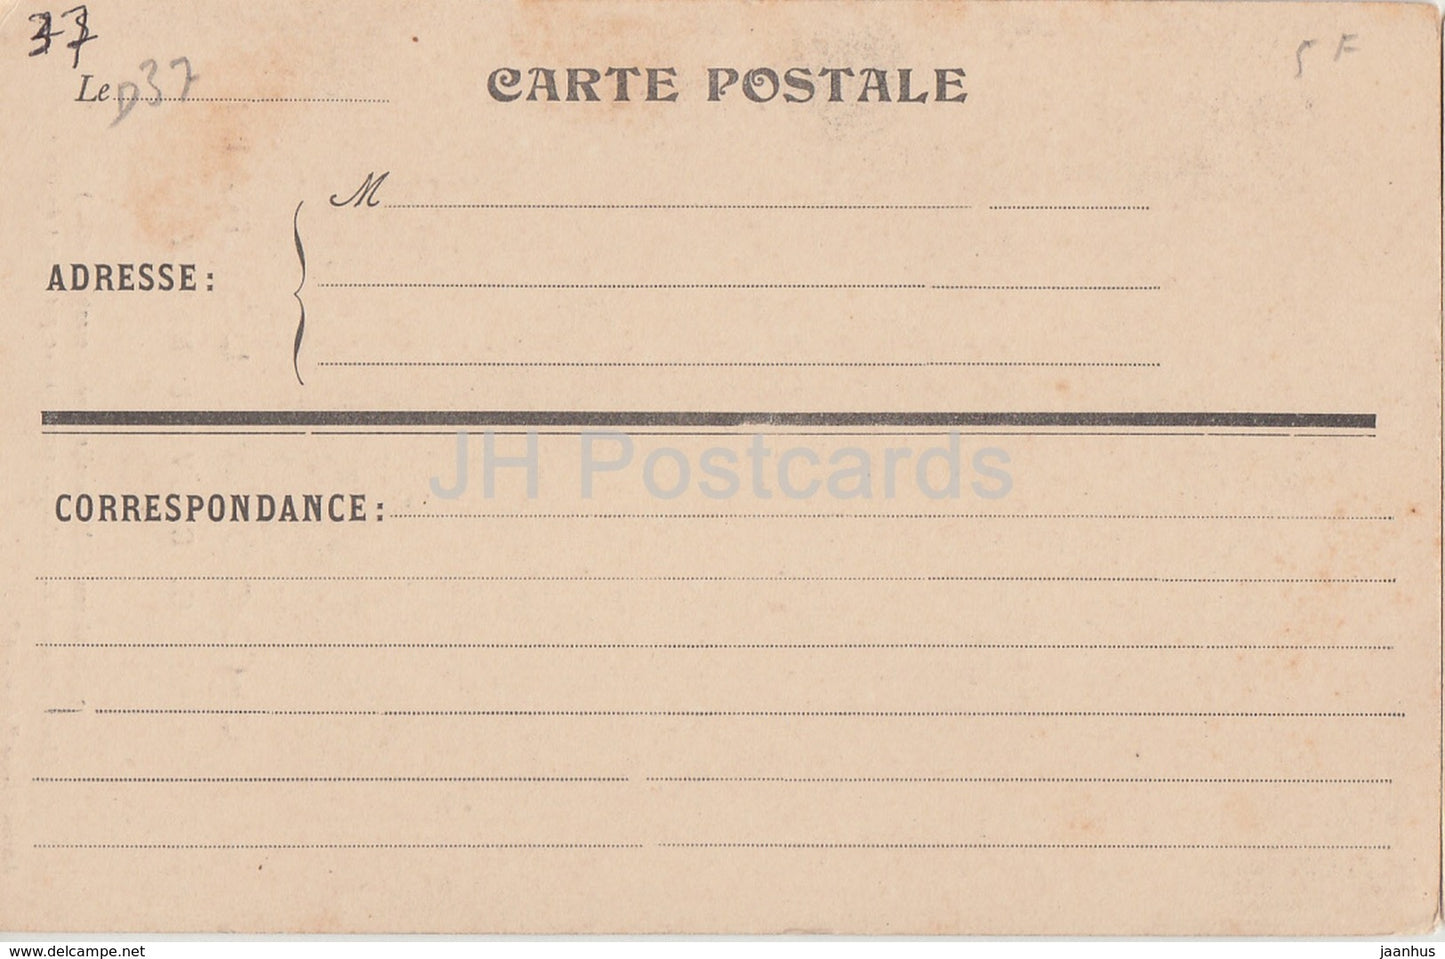 Chateau de Mollaville - pres Noizay - Cheminee de la Bibliotheque - Chocolat Lorrain - alte Postkarte - Frankreich - unbenutzt